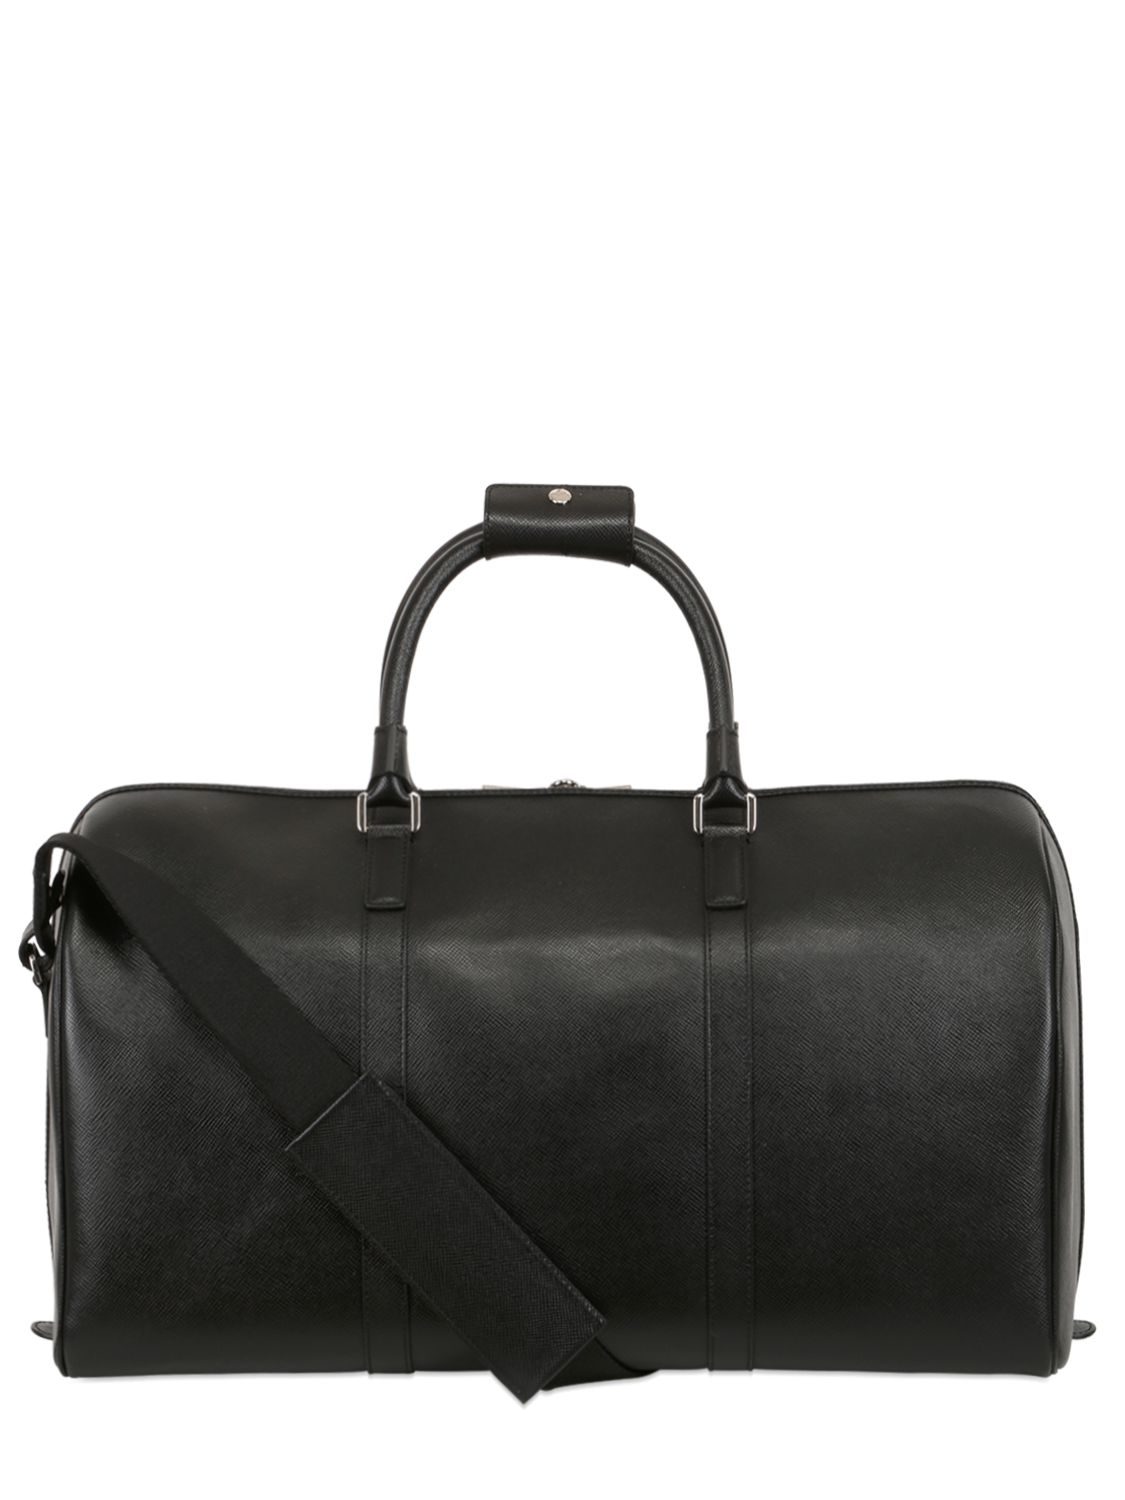 Lyst - Serapian Saffiano Leather Duffle Bag in Black for Men